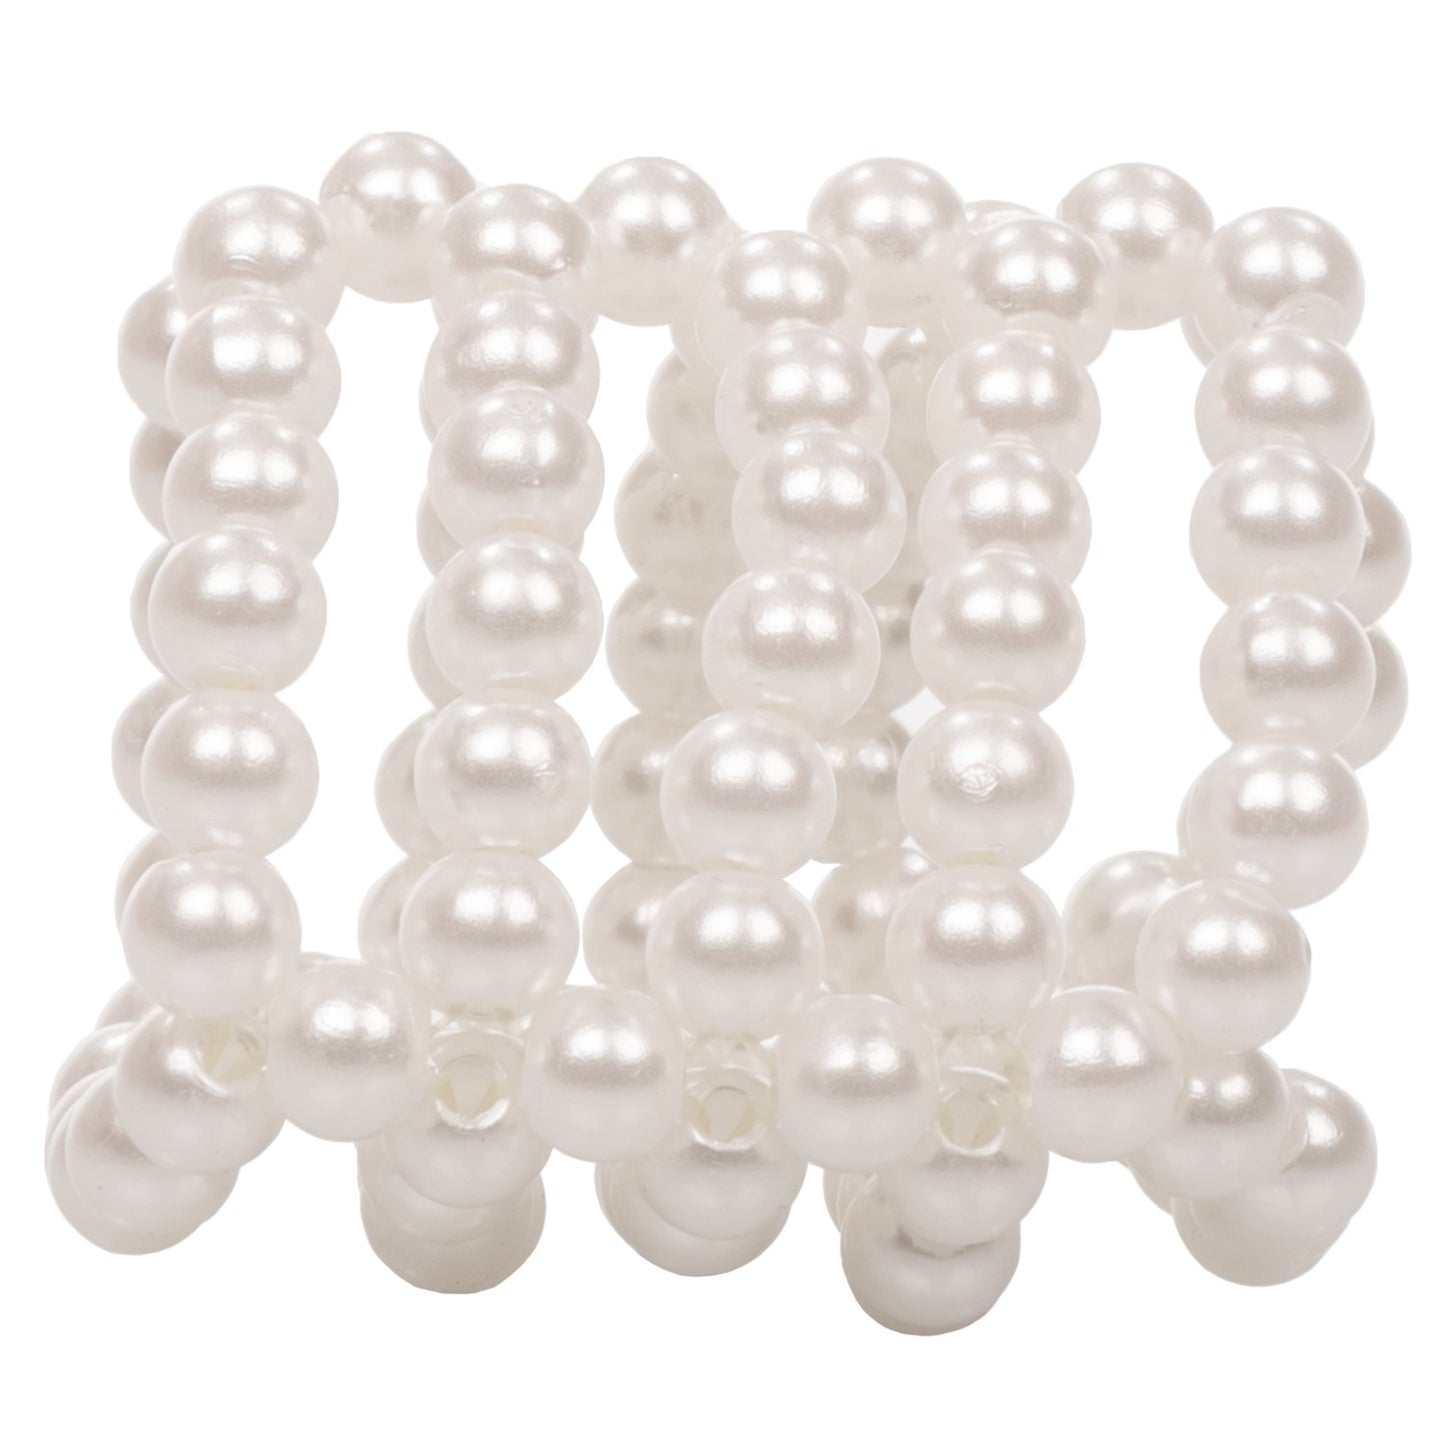 Basic Essentials Pearl Stroker Beads - 1.5